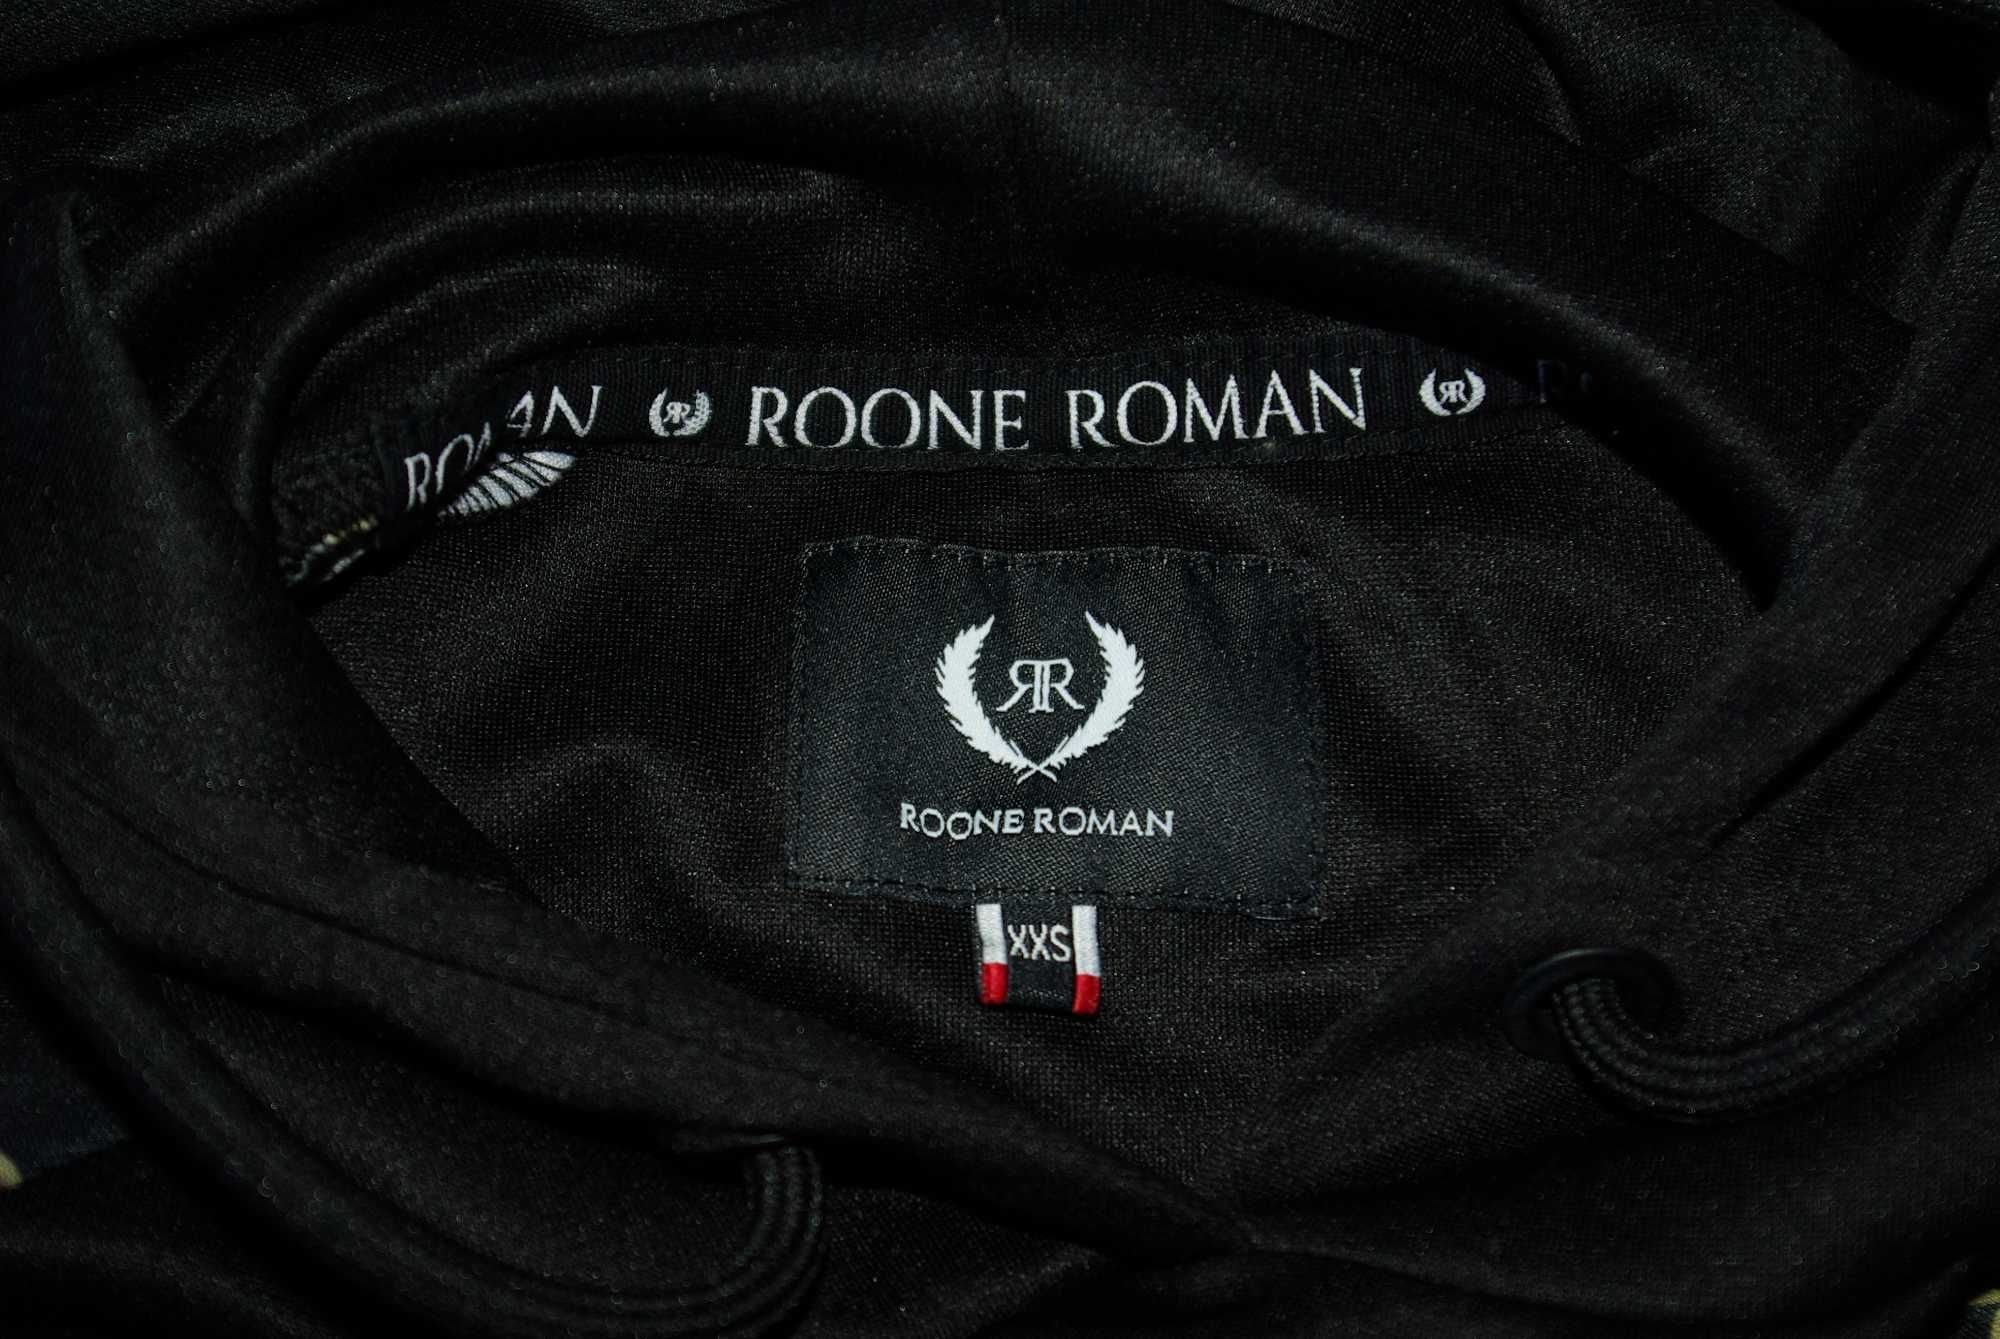 Camisola de senhora, tamanho xxs, marca Roone Roman, usada